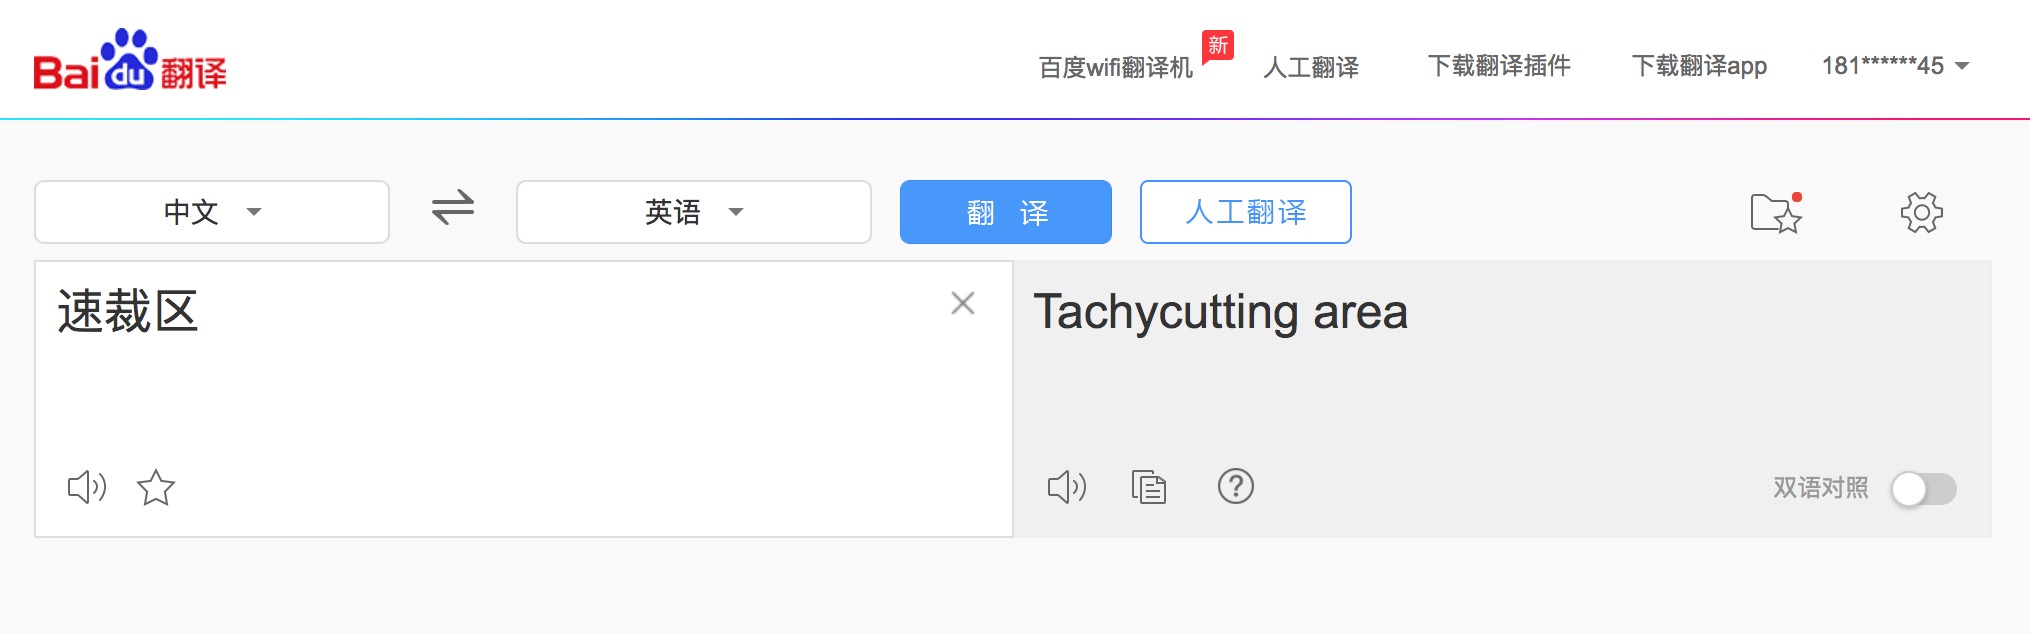 shenzhen-court-chinglish-baidu-translate.jpg